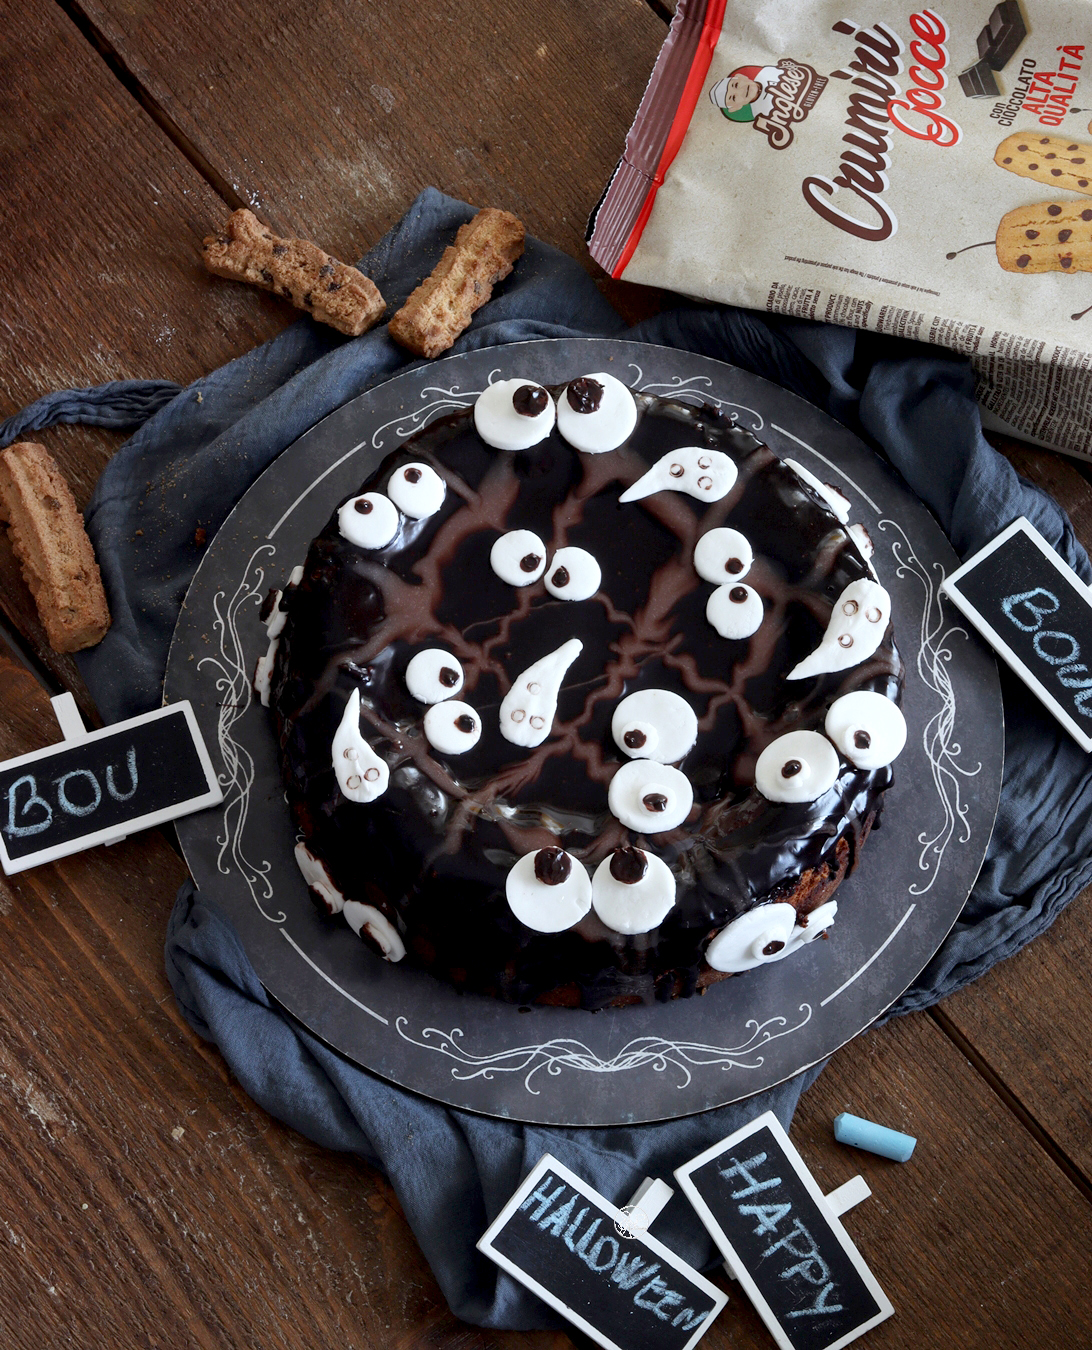 Cheesecake au chocolat sans gluten pour Halloween - La Cassata Celiaca